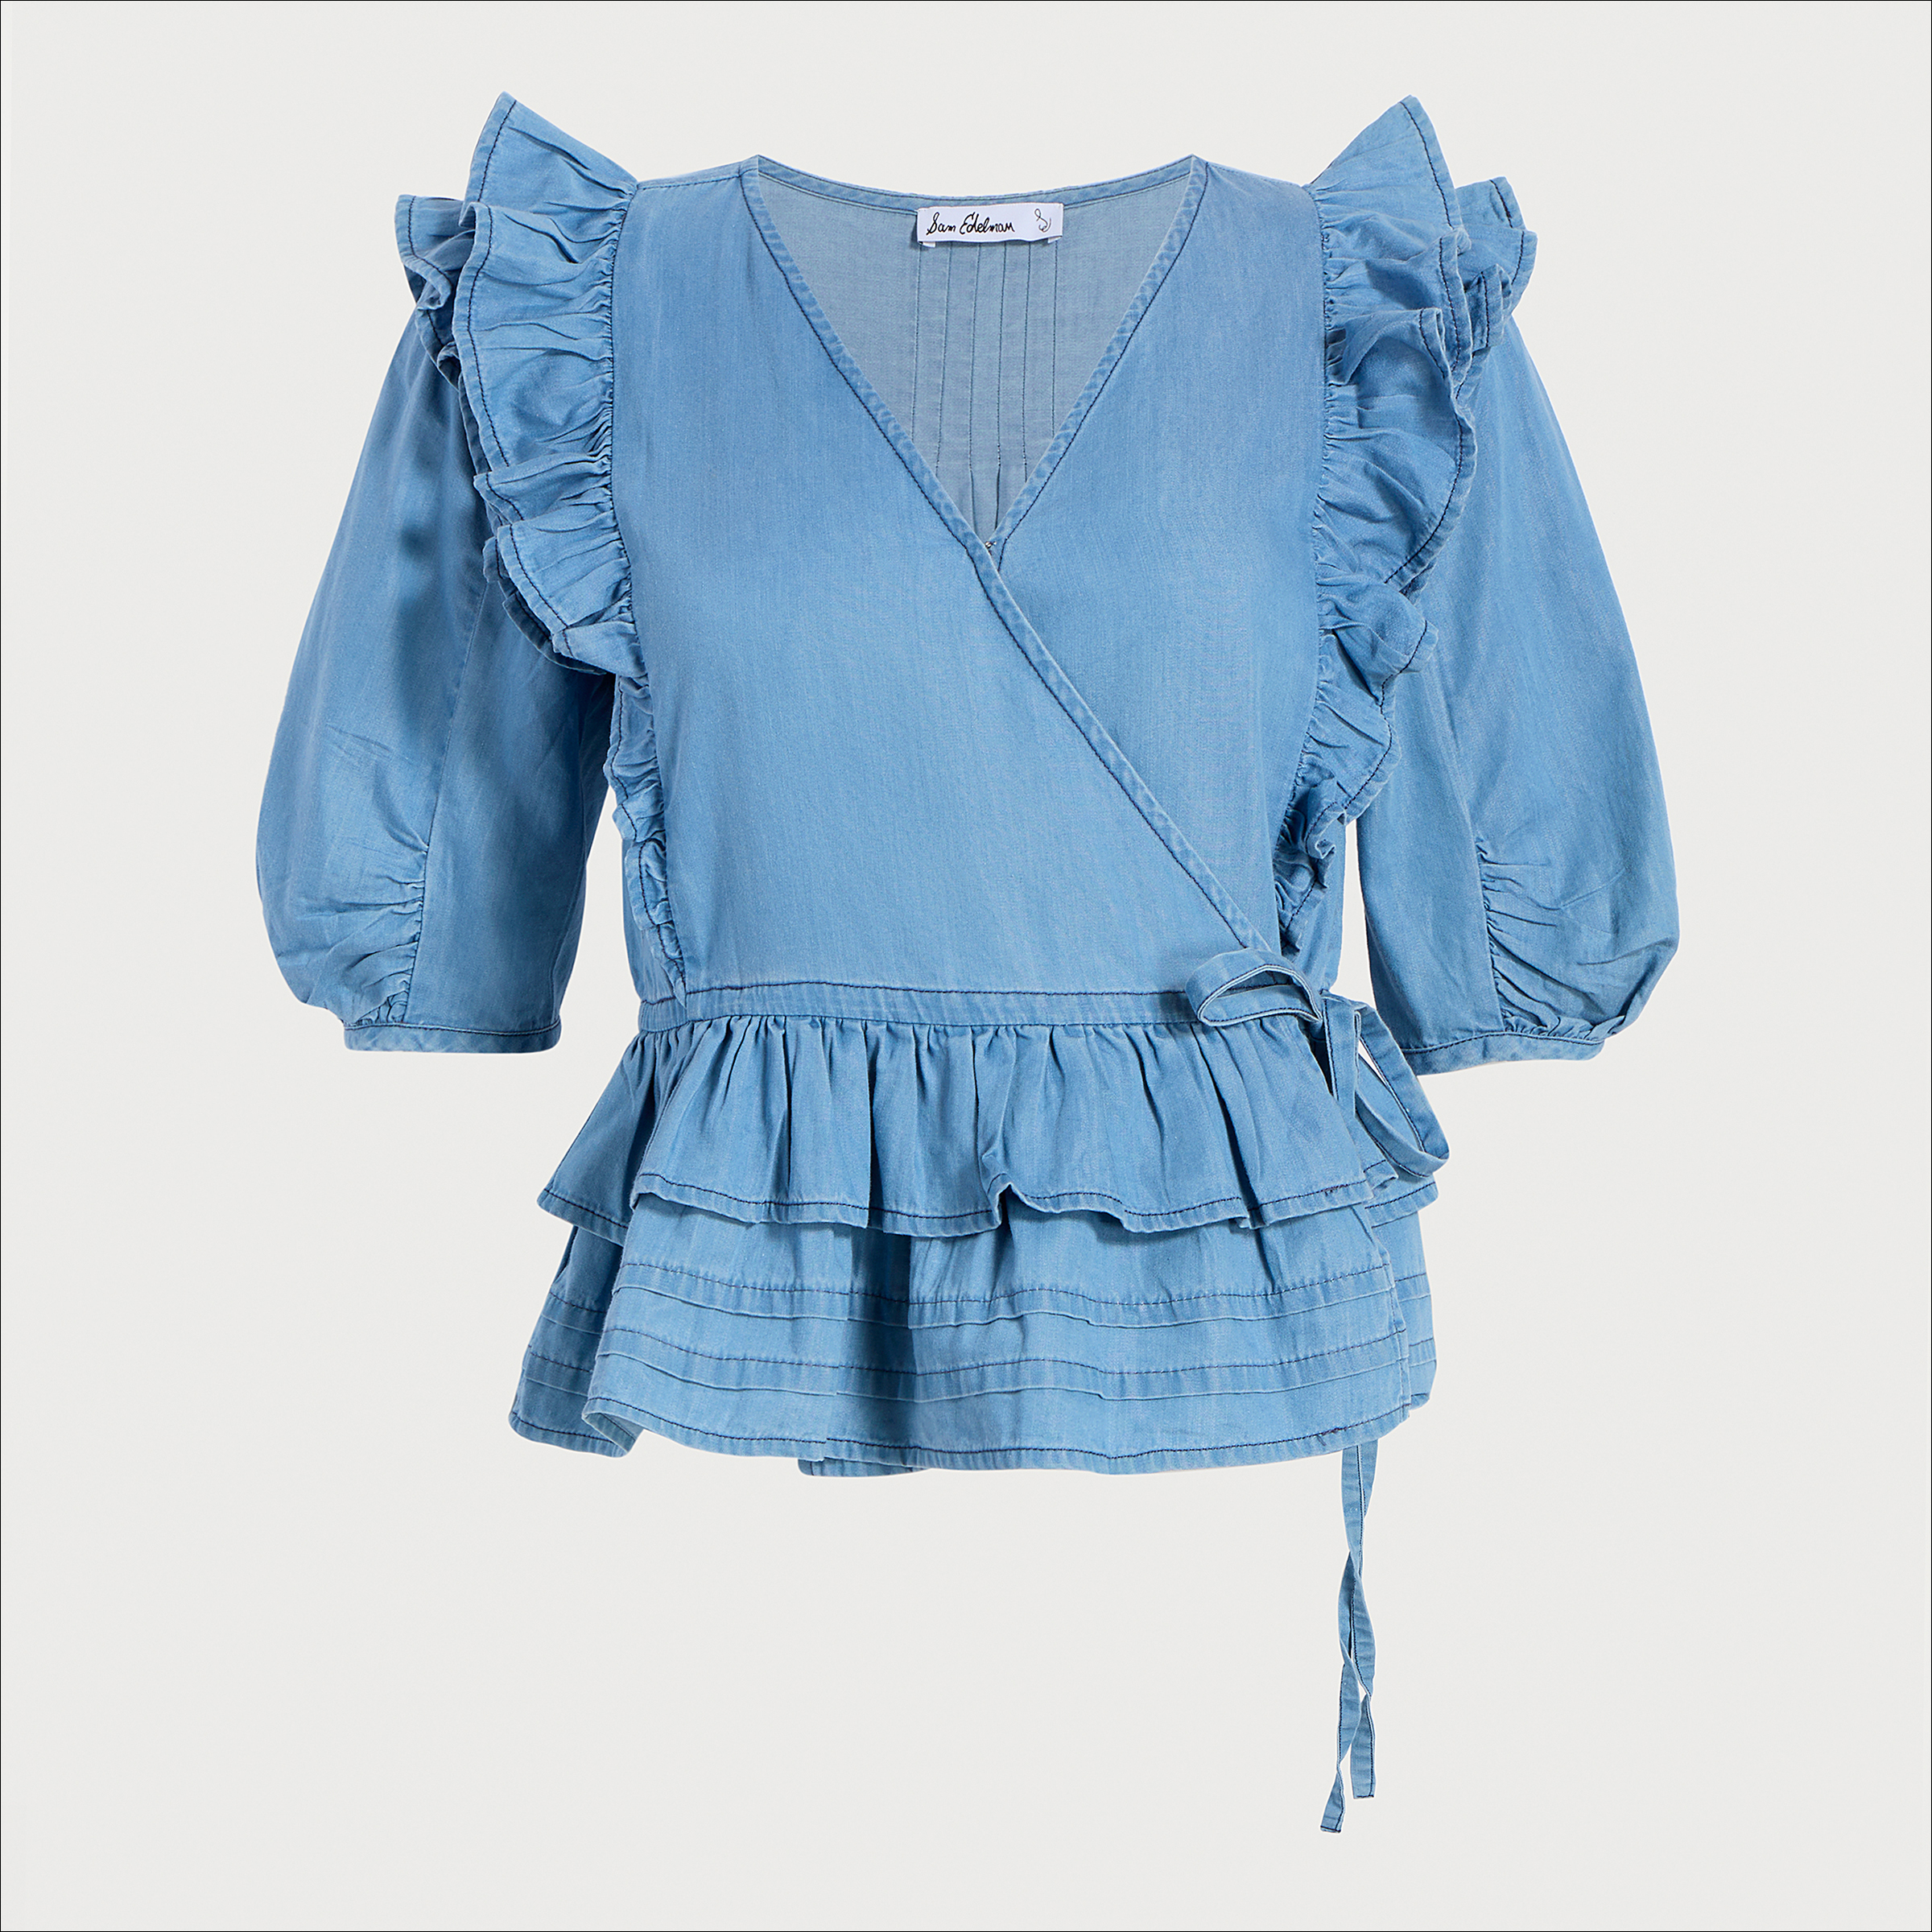 Entyinea Womens Summer Tops Ruffled Short Sleeve Round Neck Twist Front  Tops Shirts Blue XL 